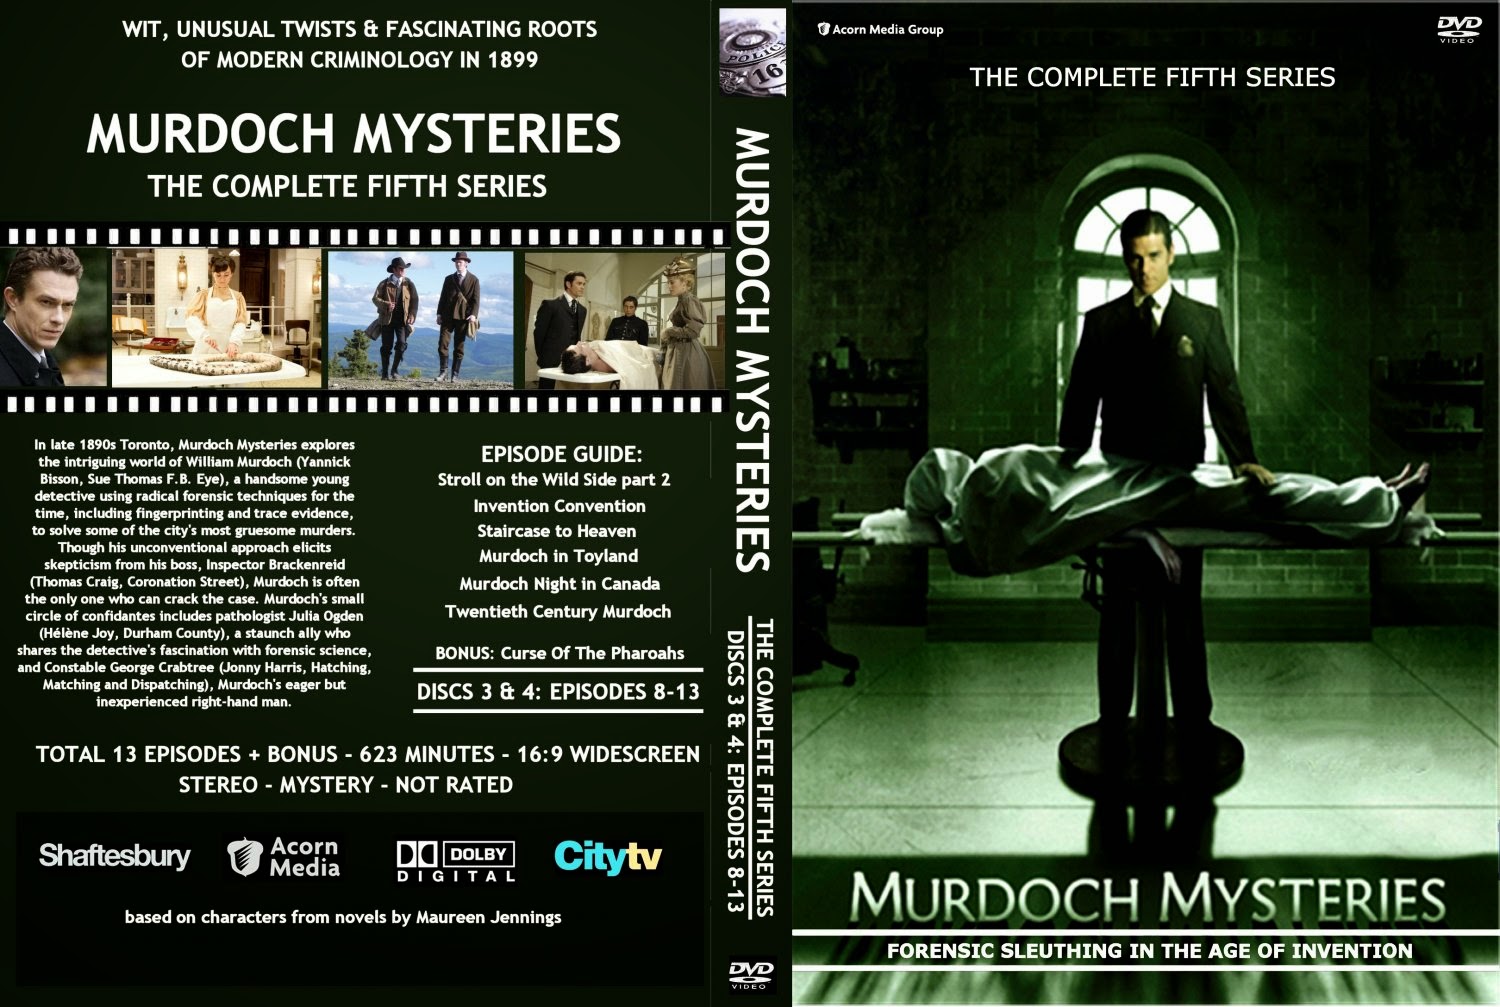 Murdoch mysteries episode list